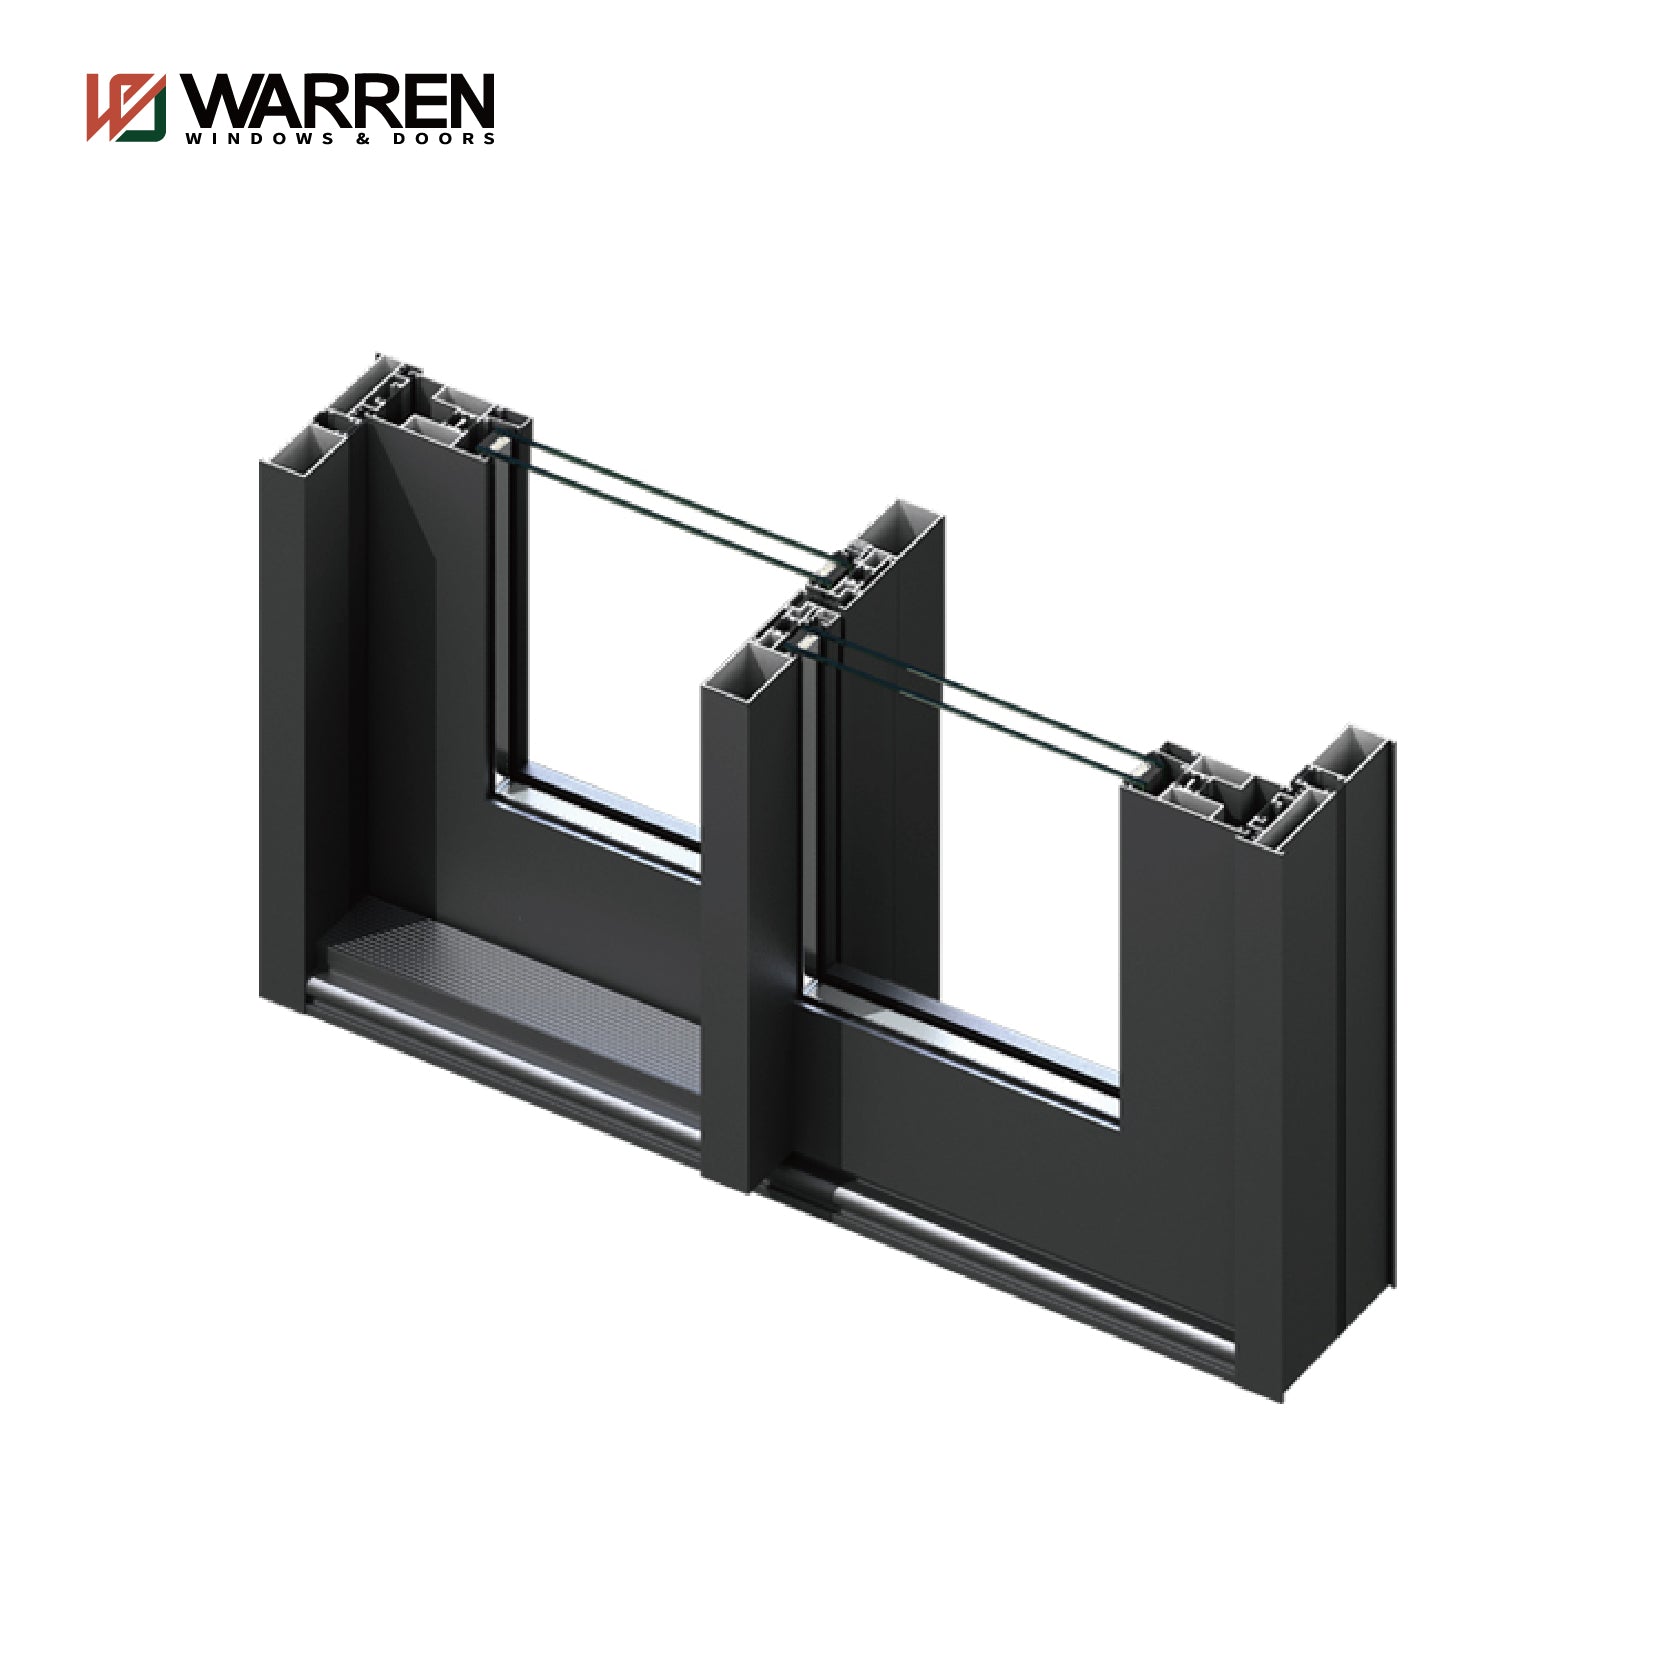 Warren Customized China Doors Doubl Glass Aluminum Slide Door For Business And Home